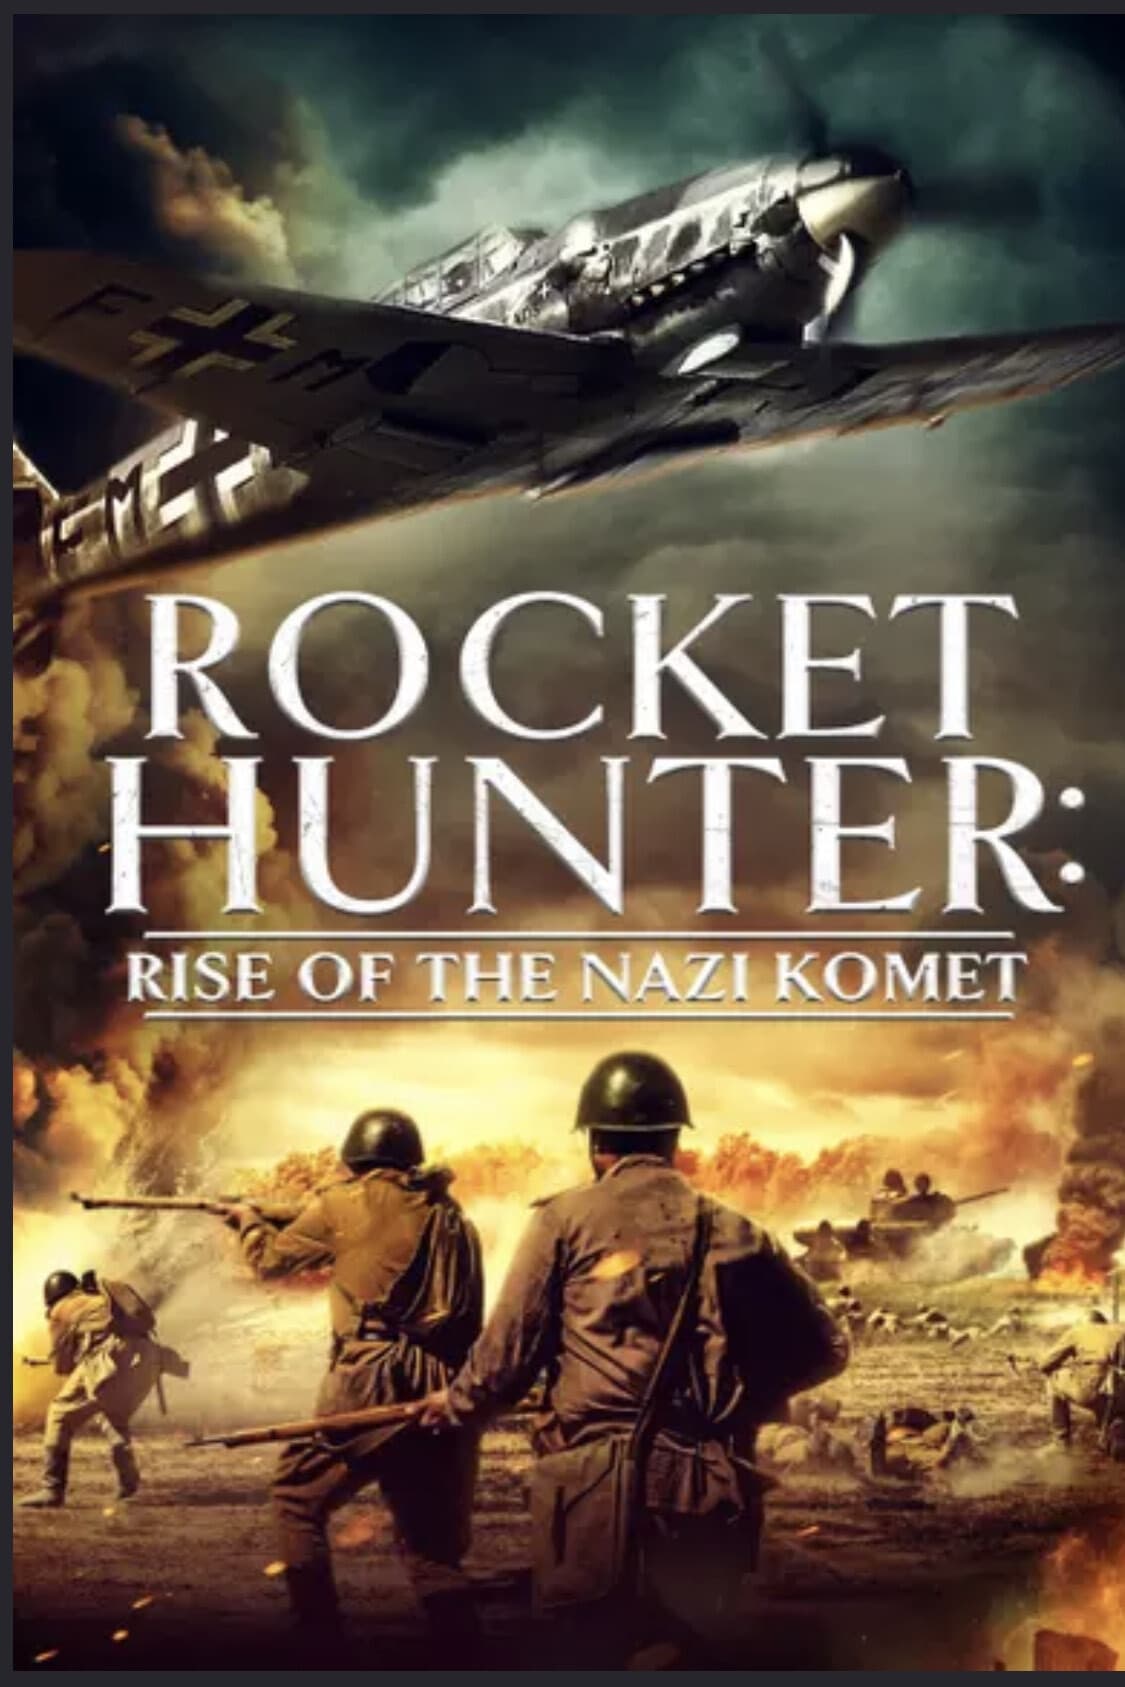 Rocket Hunter: Rise of the Nazi Komet